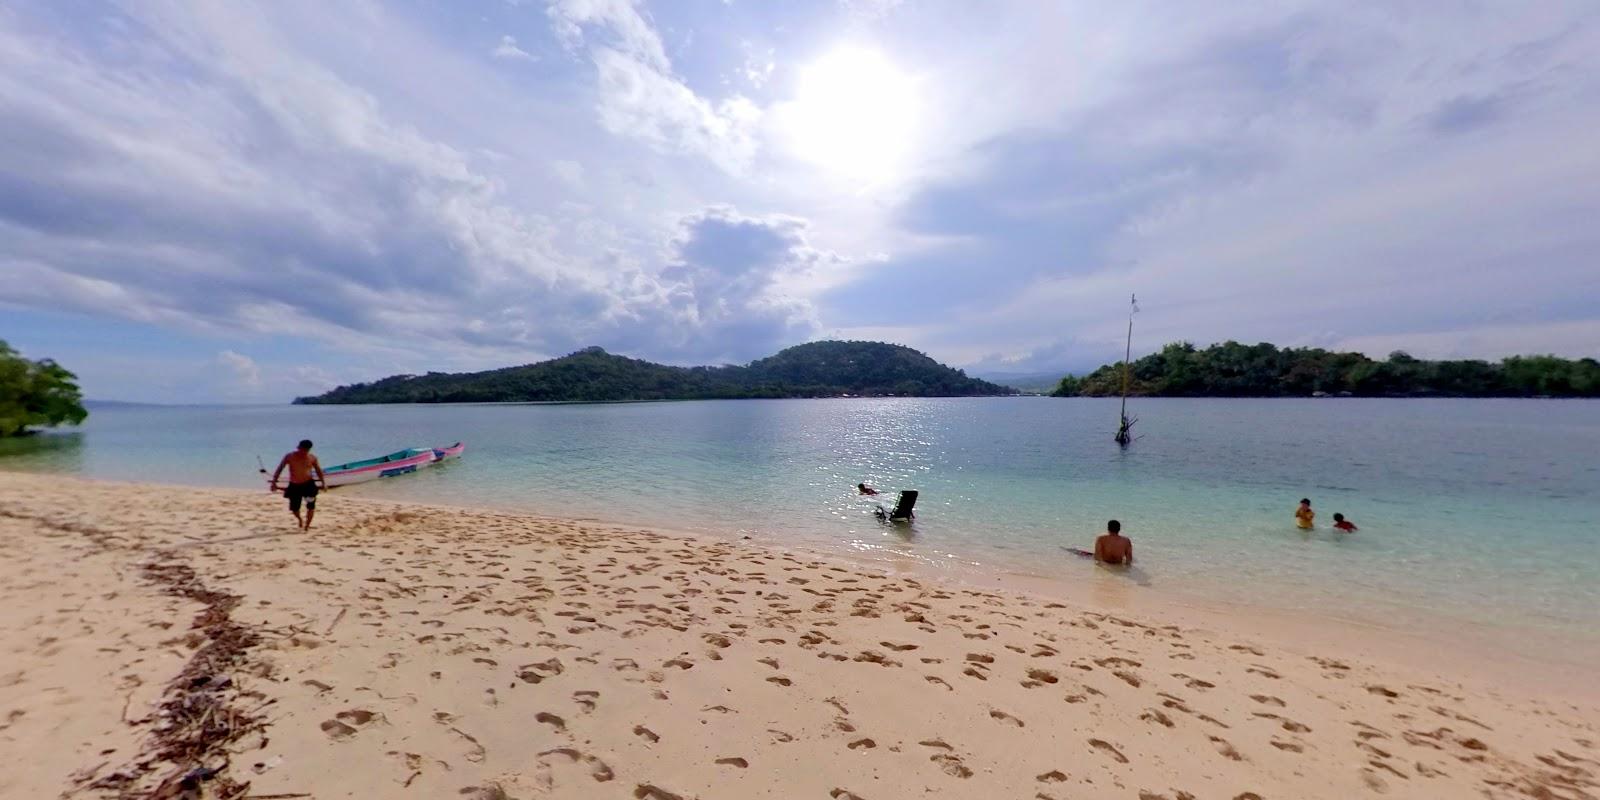 Sandee - Simoadang Beach